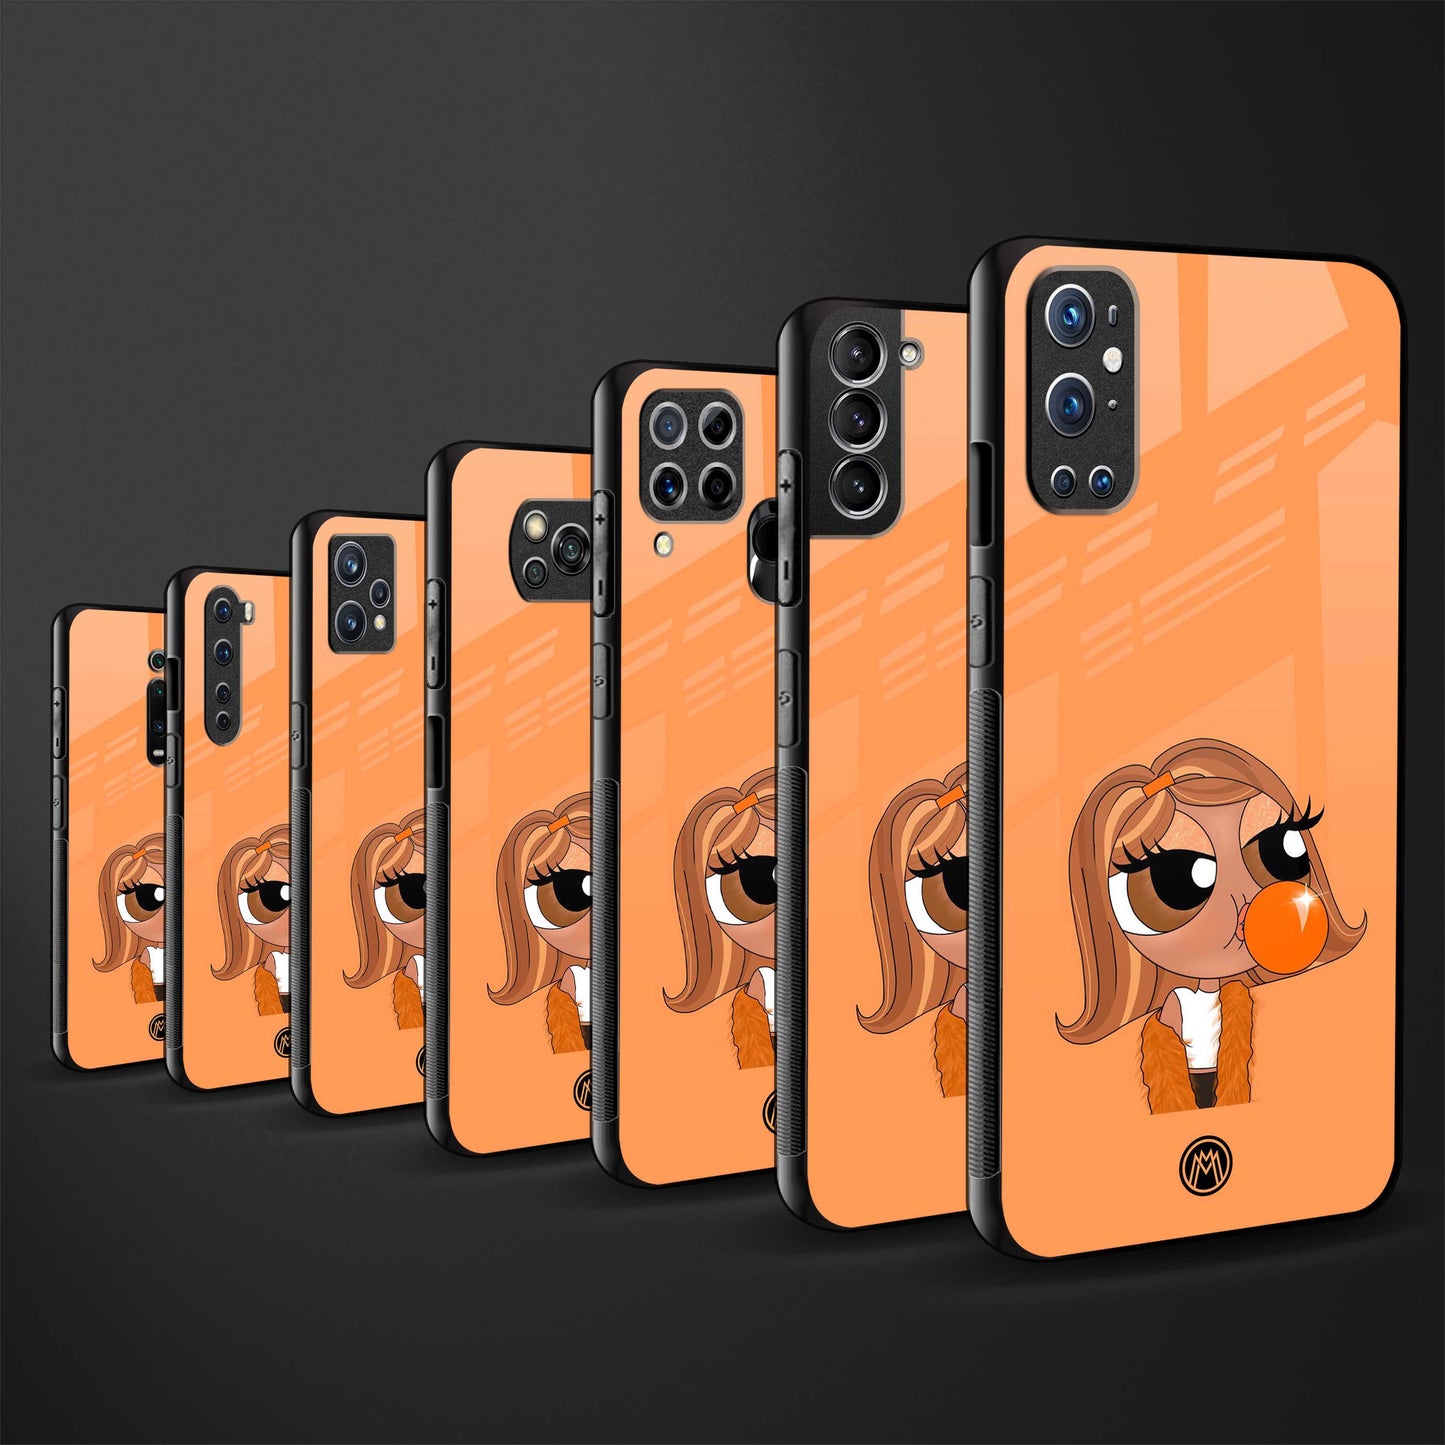 orange tote powerpuff girl back phone cover | glass case for oppo reno 5